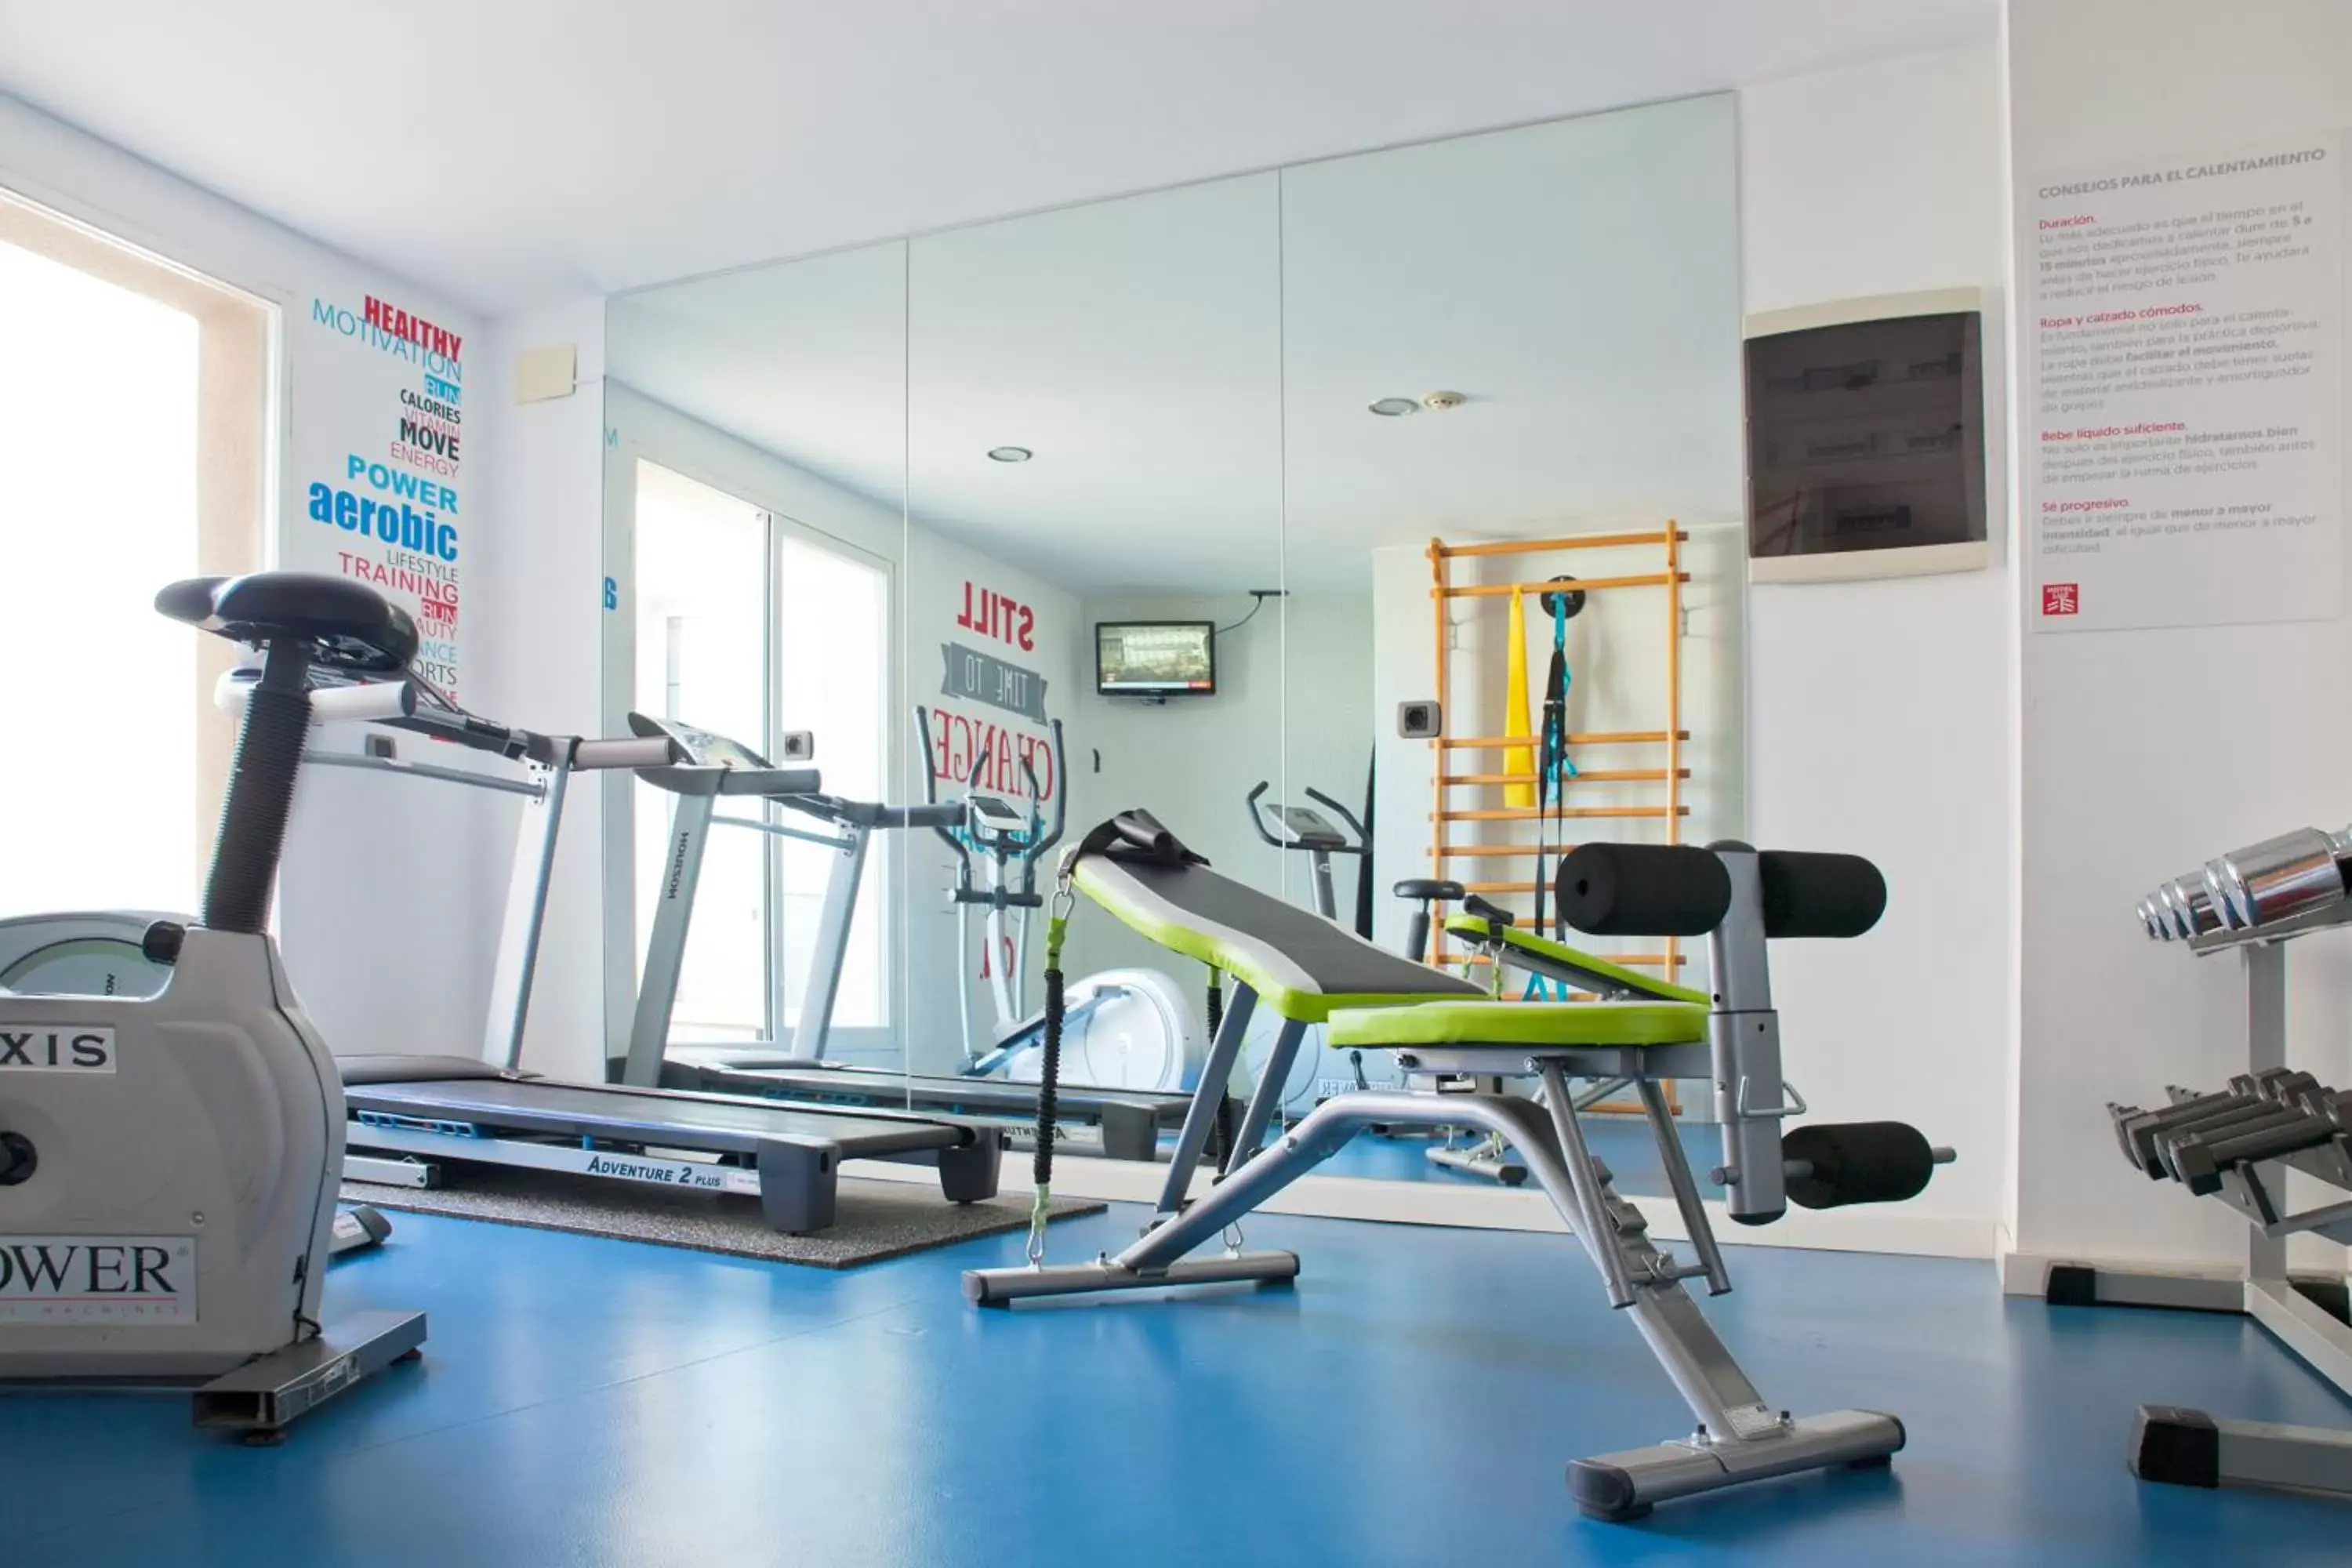 Fitness centre/facilities, Fitness Center/Facilities in Civis Luz Castellón 4*S